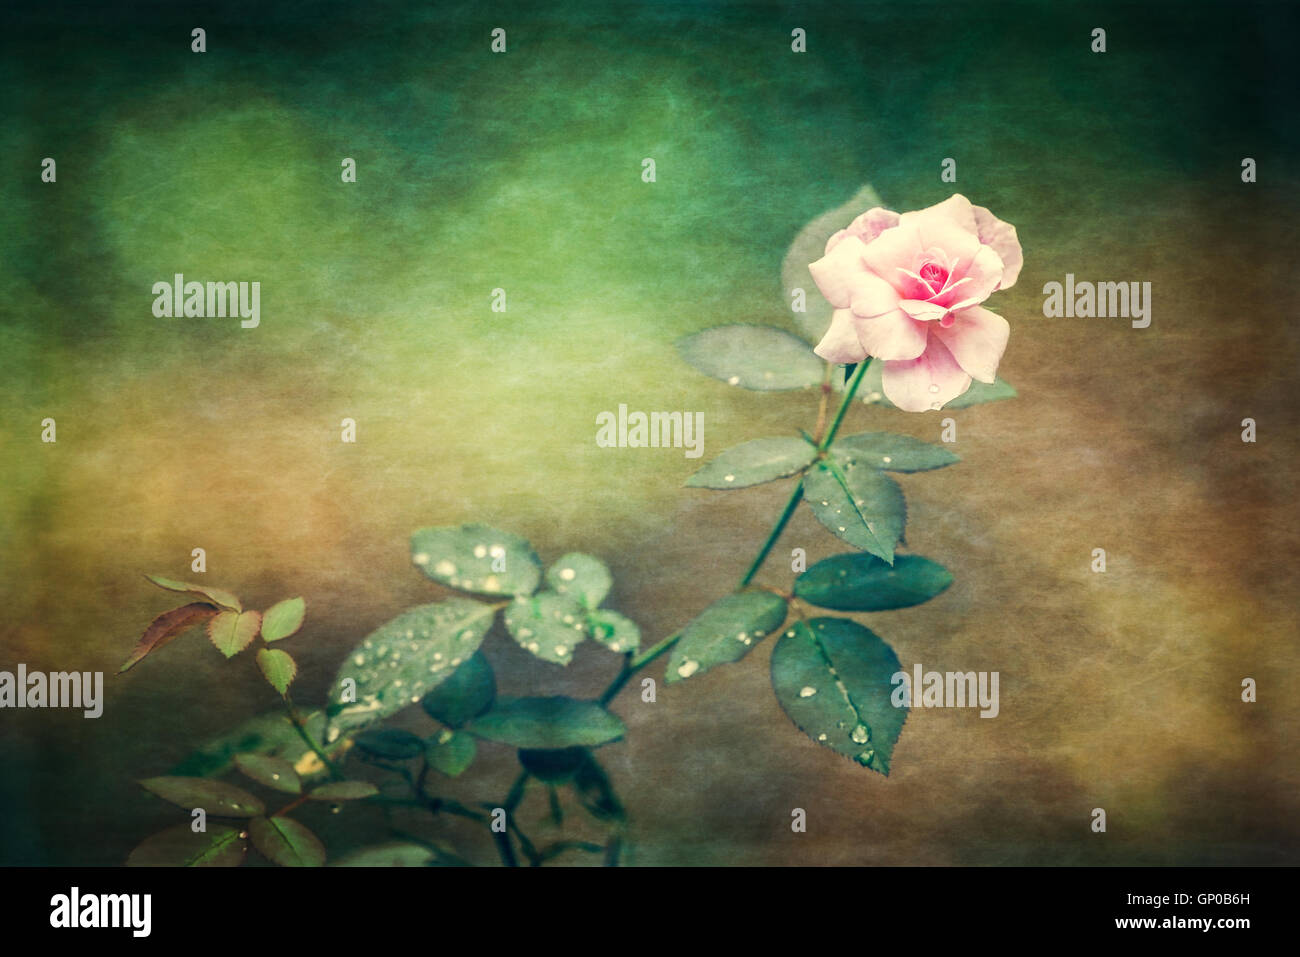 Flor rosa tema rosa fotografías e imágenes de alta resolución - Alamy